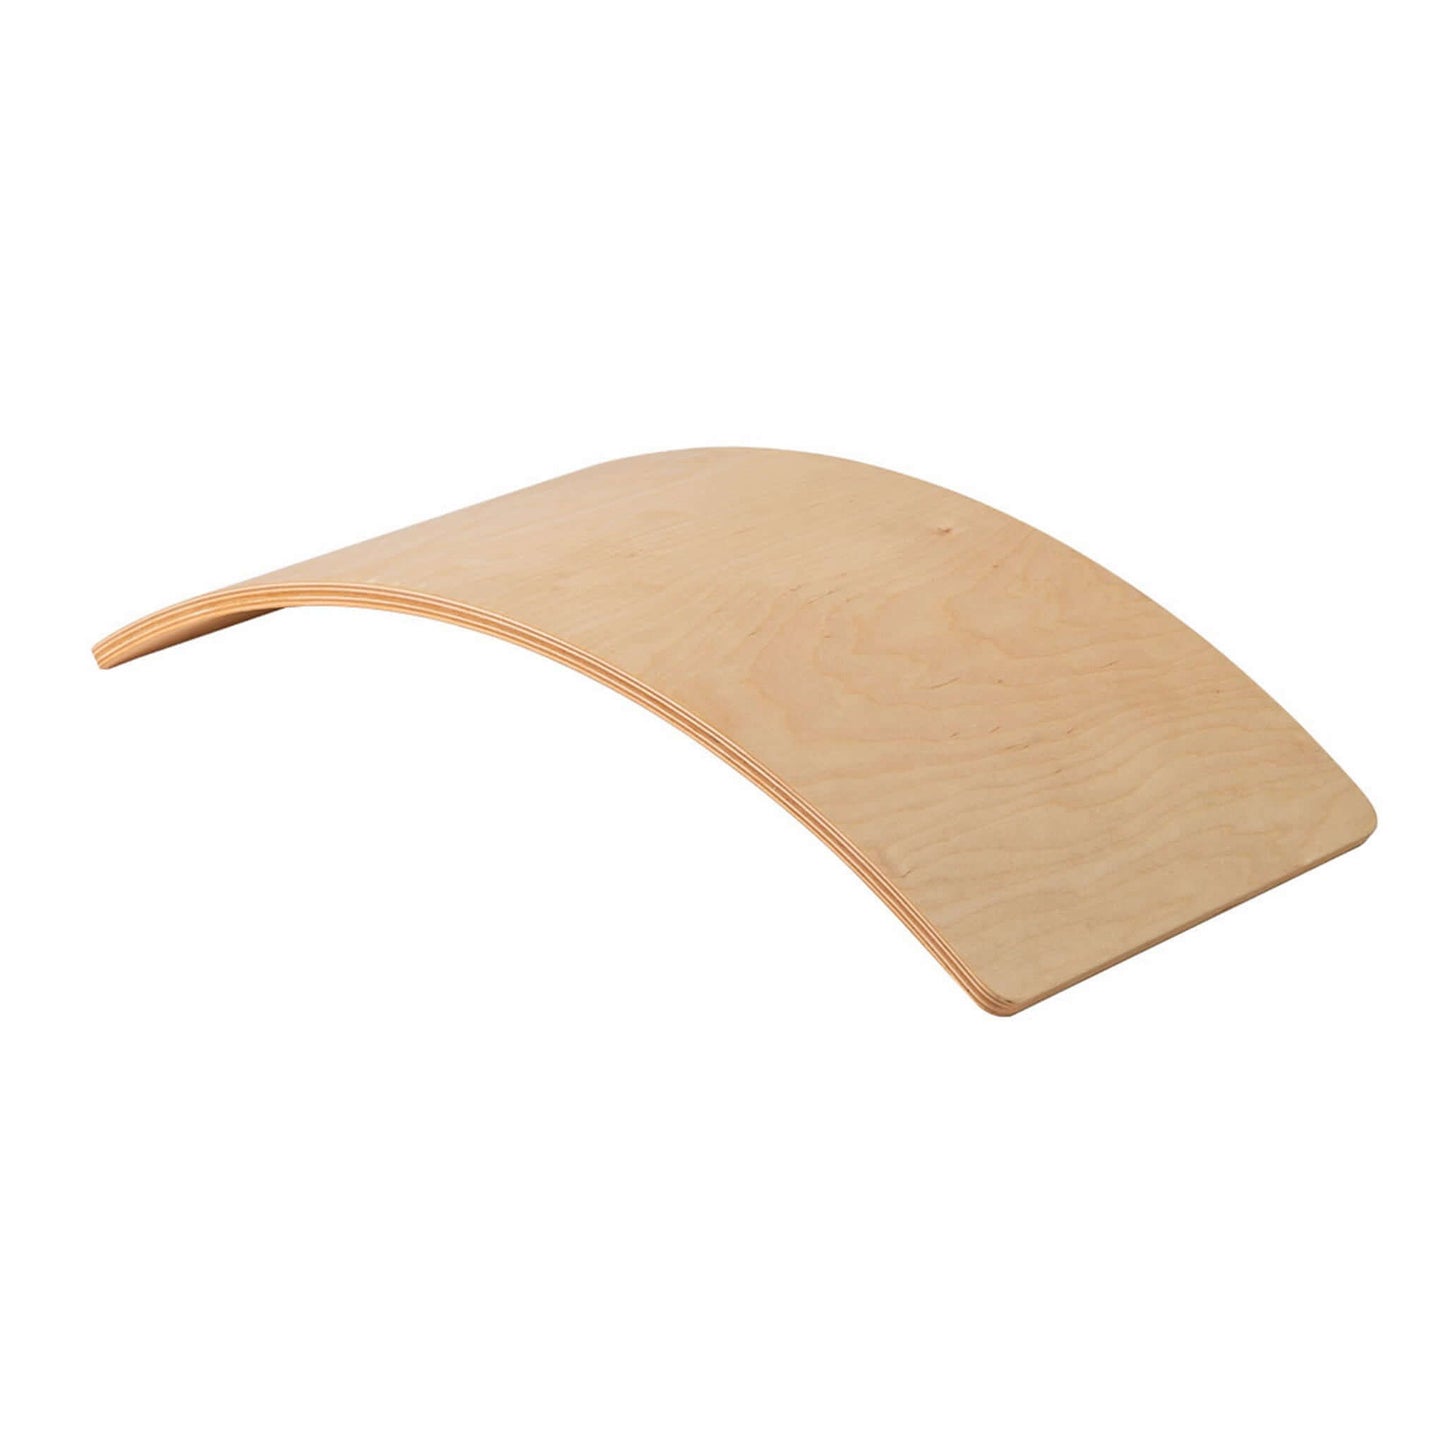 MeowBaby® Balance Board Balancierbrett aus Holz Kleinkind